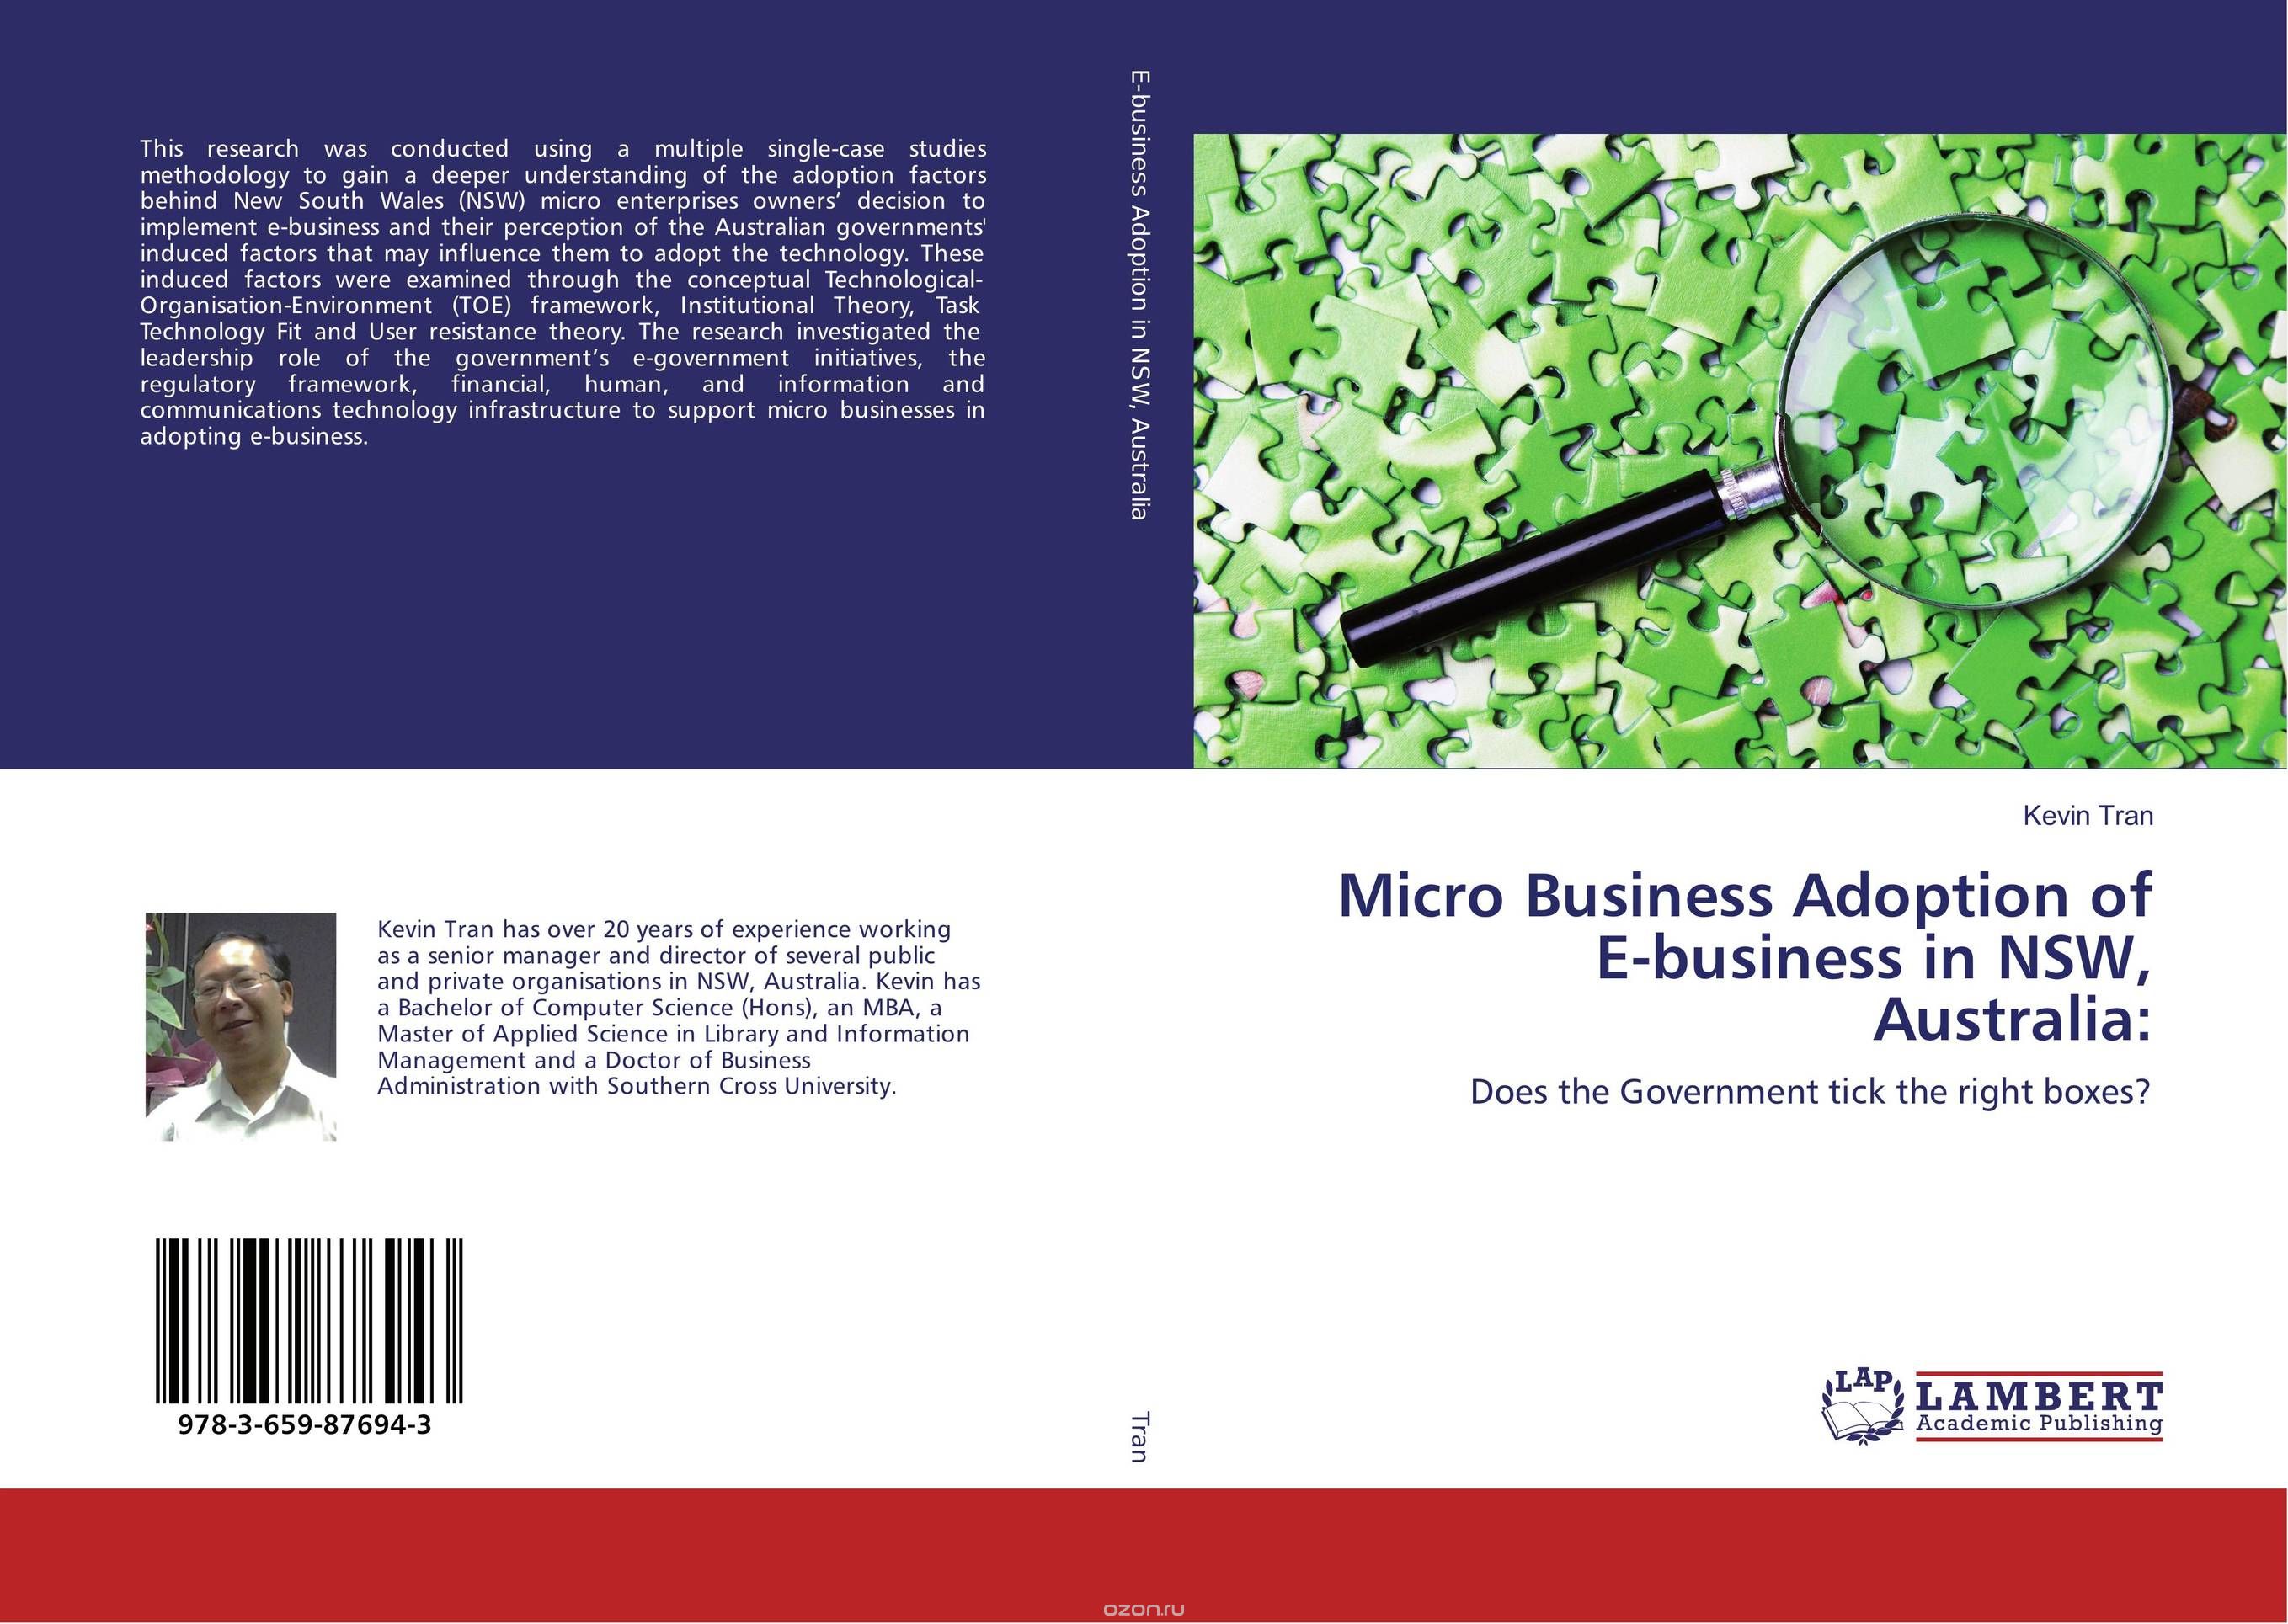 Micro Business Adoption of E-business in NSW, Australia: